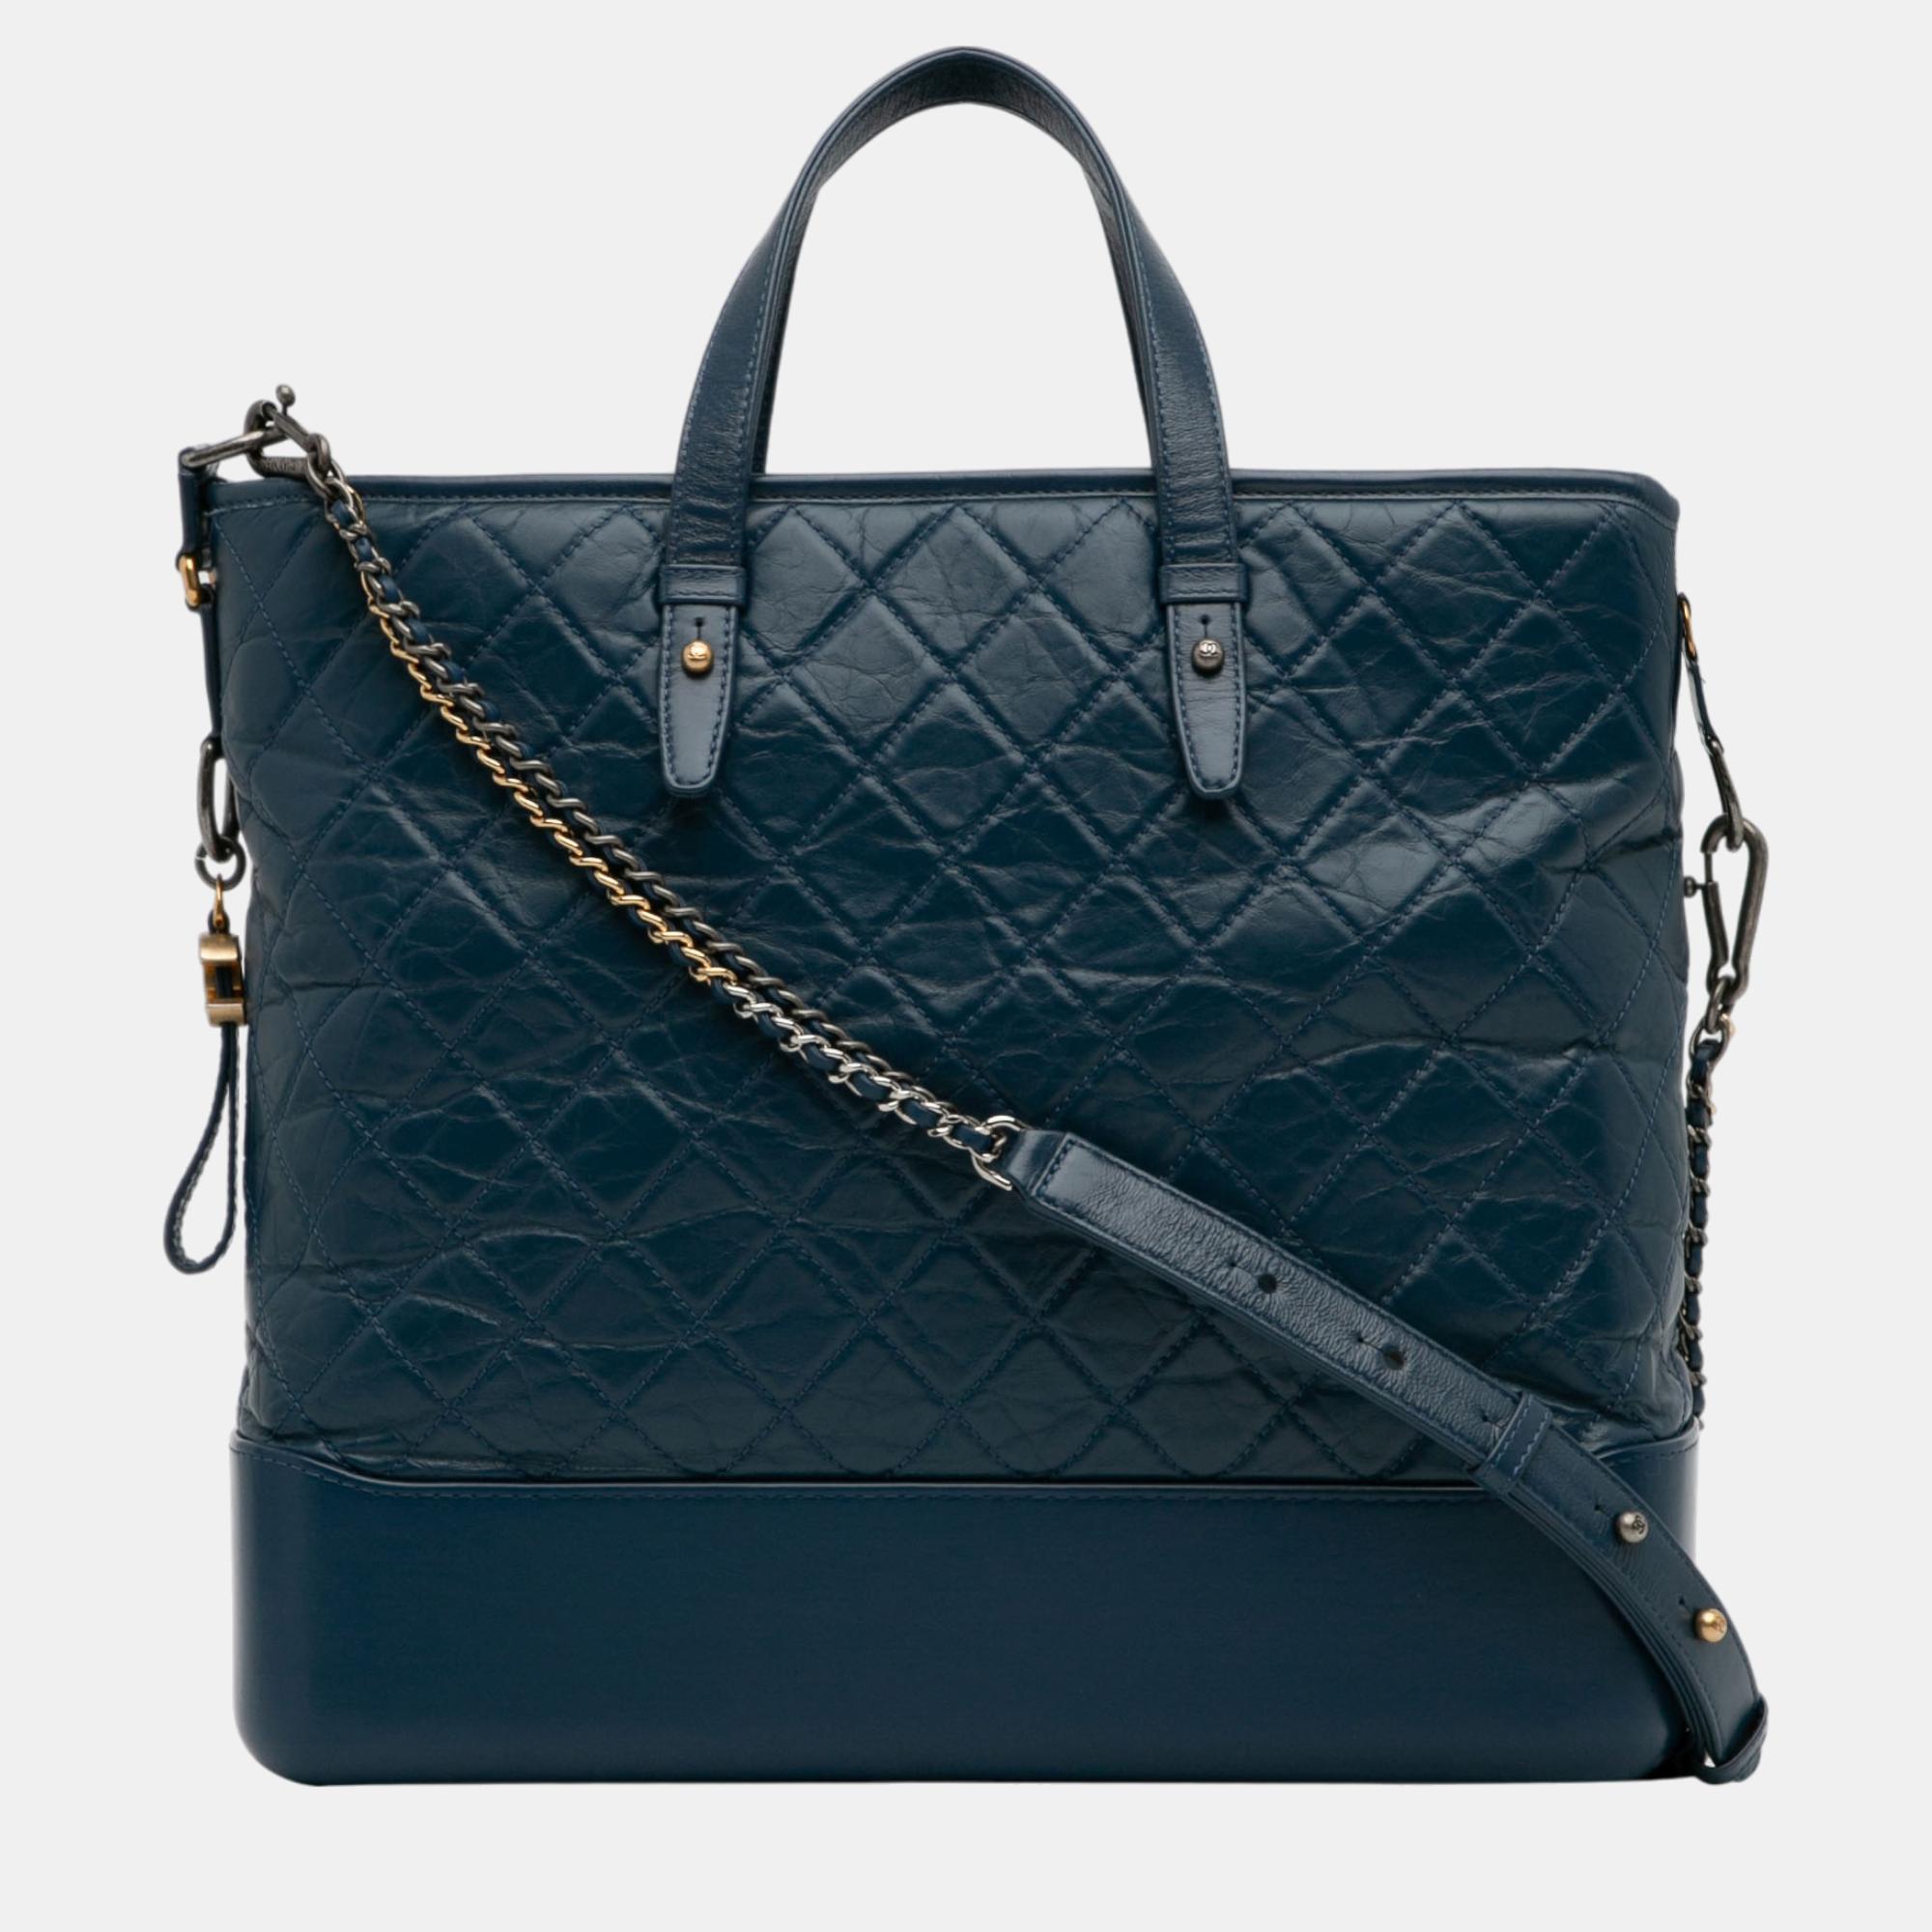 Chanel blue large gabrielle shopping satchel